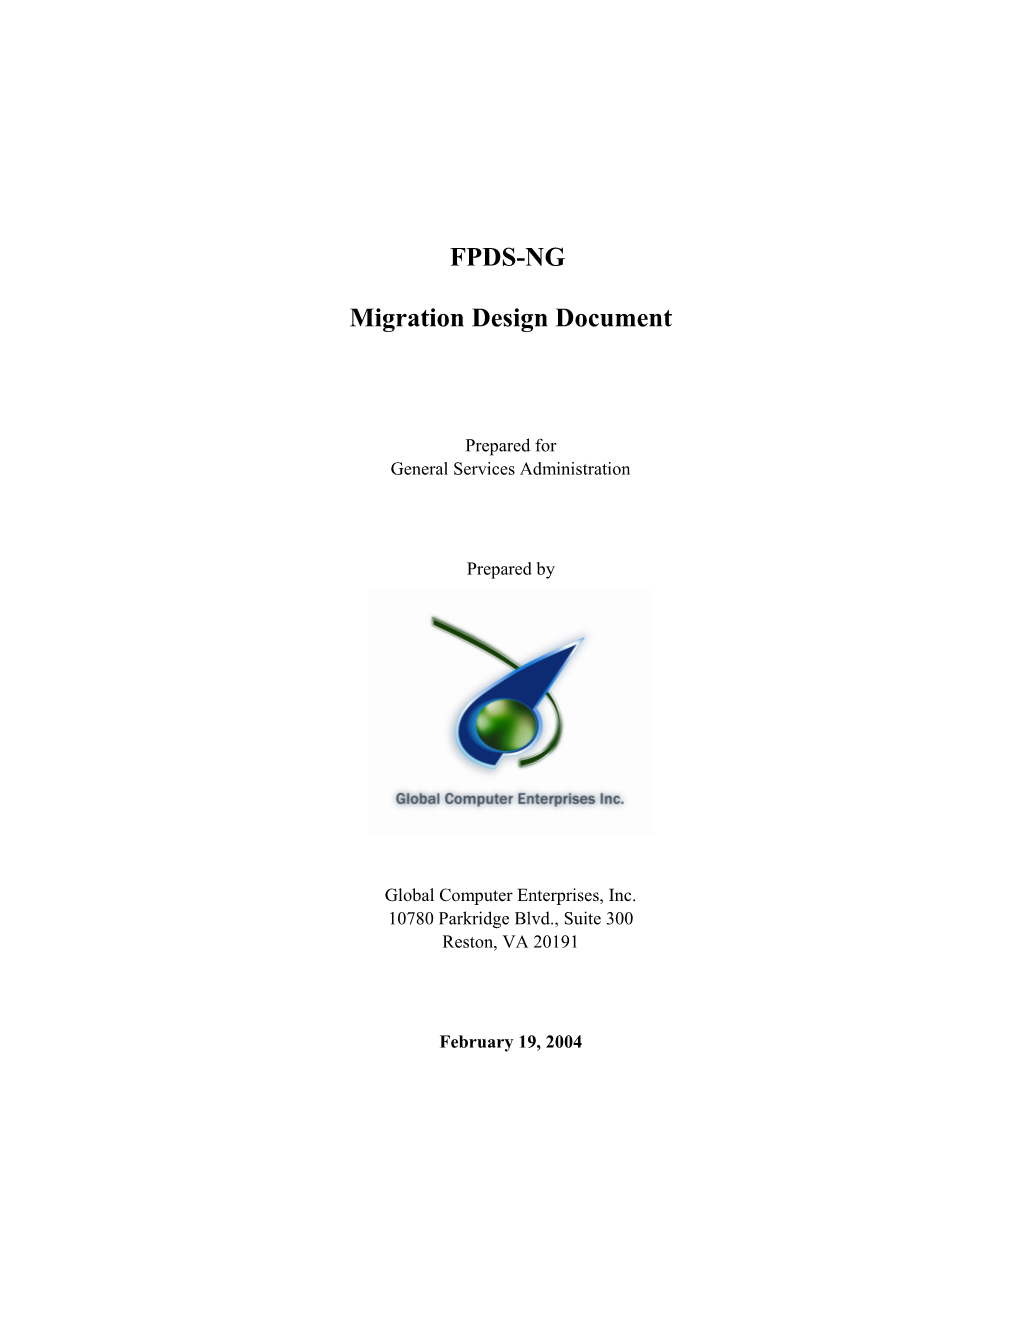 FPDS Migration Design Document